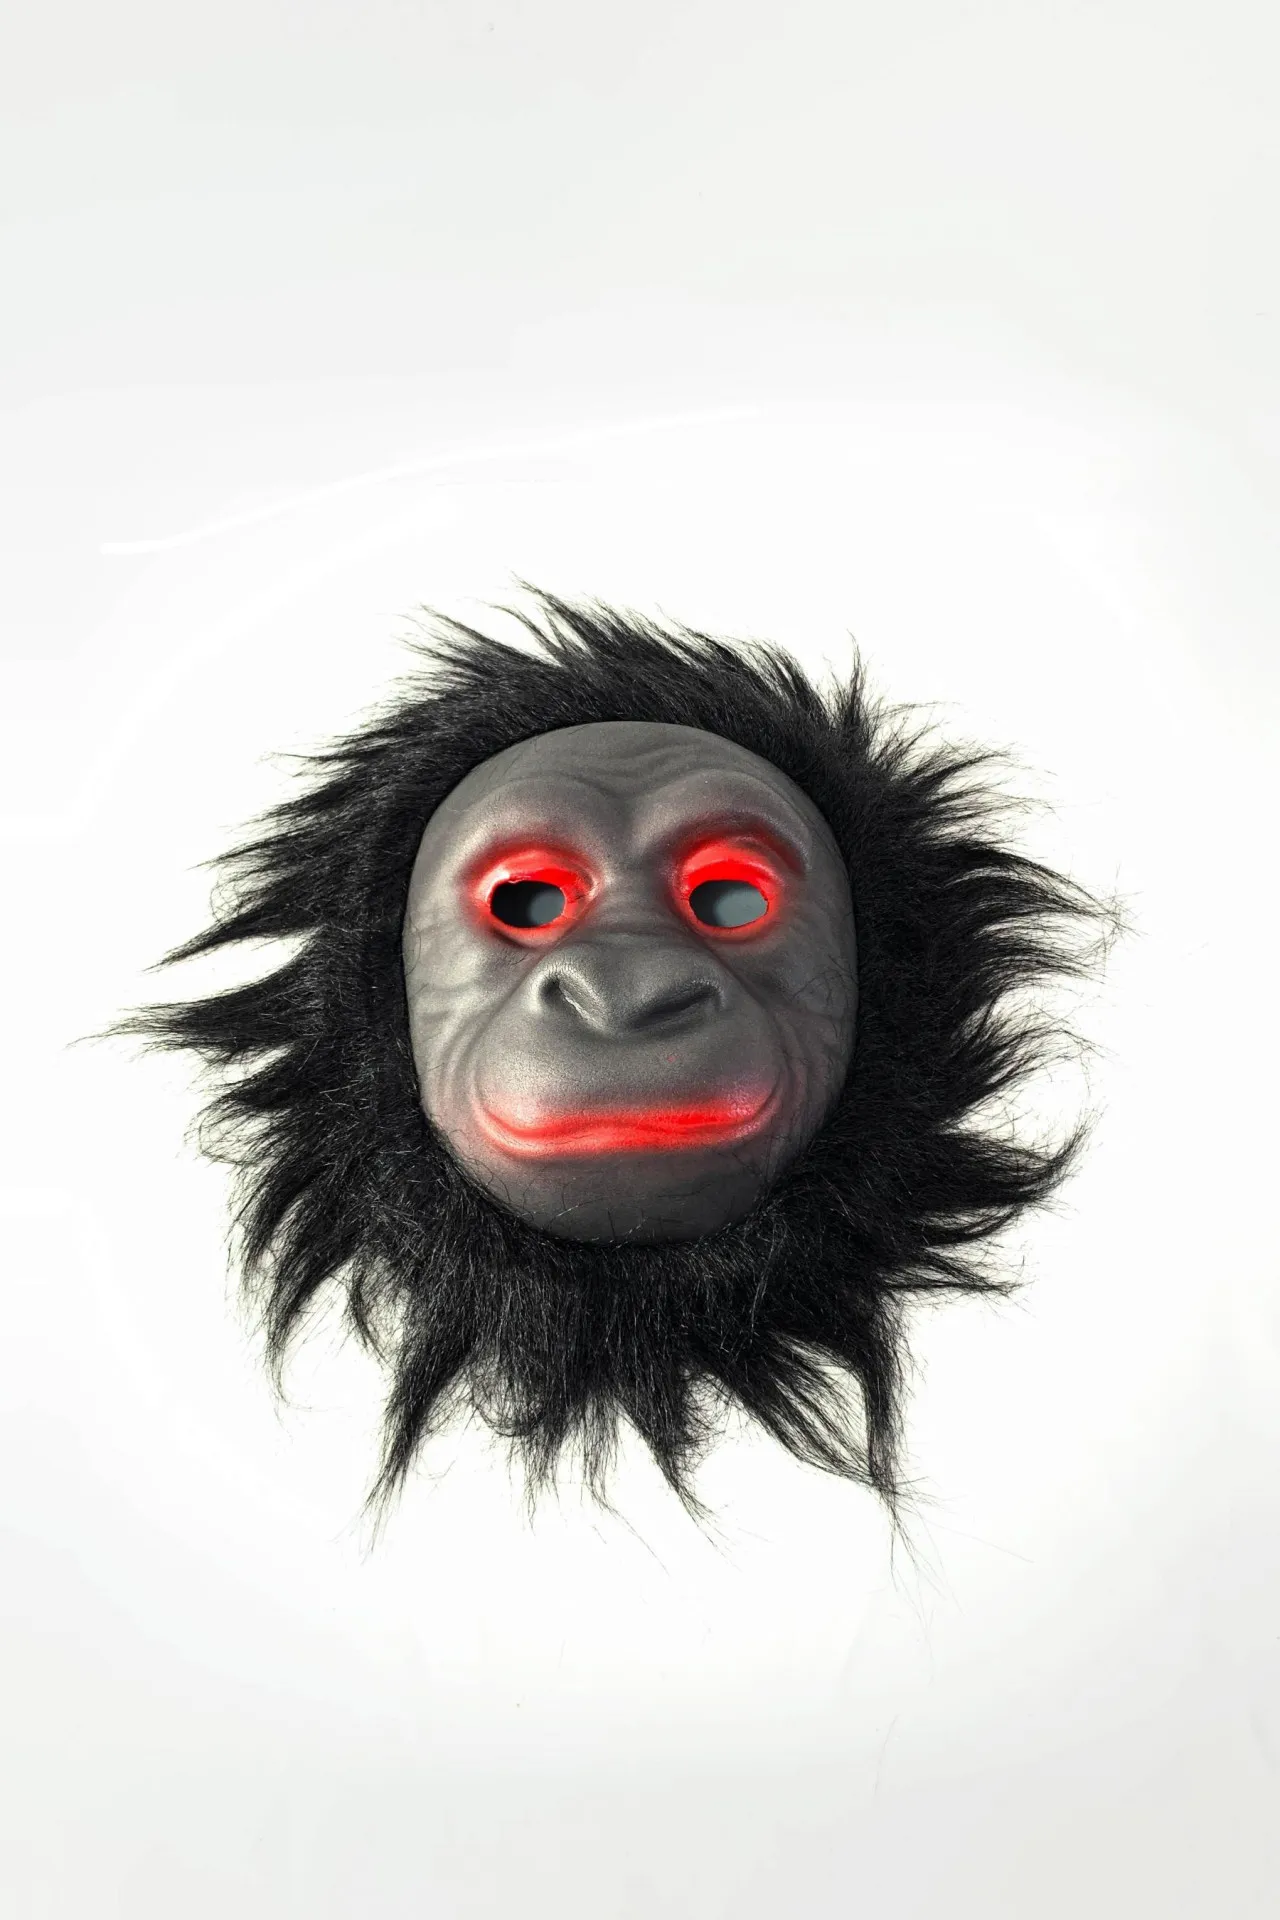 Mo'ynali karnaval niqobi maymun a011 SHK Gift qora#1